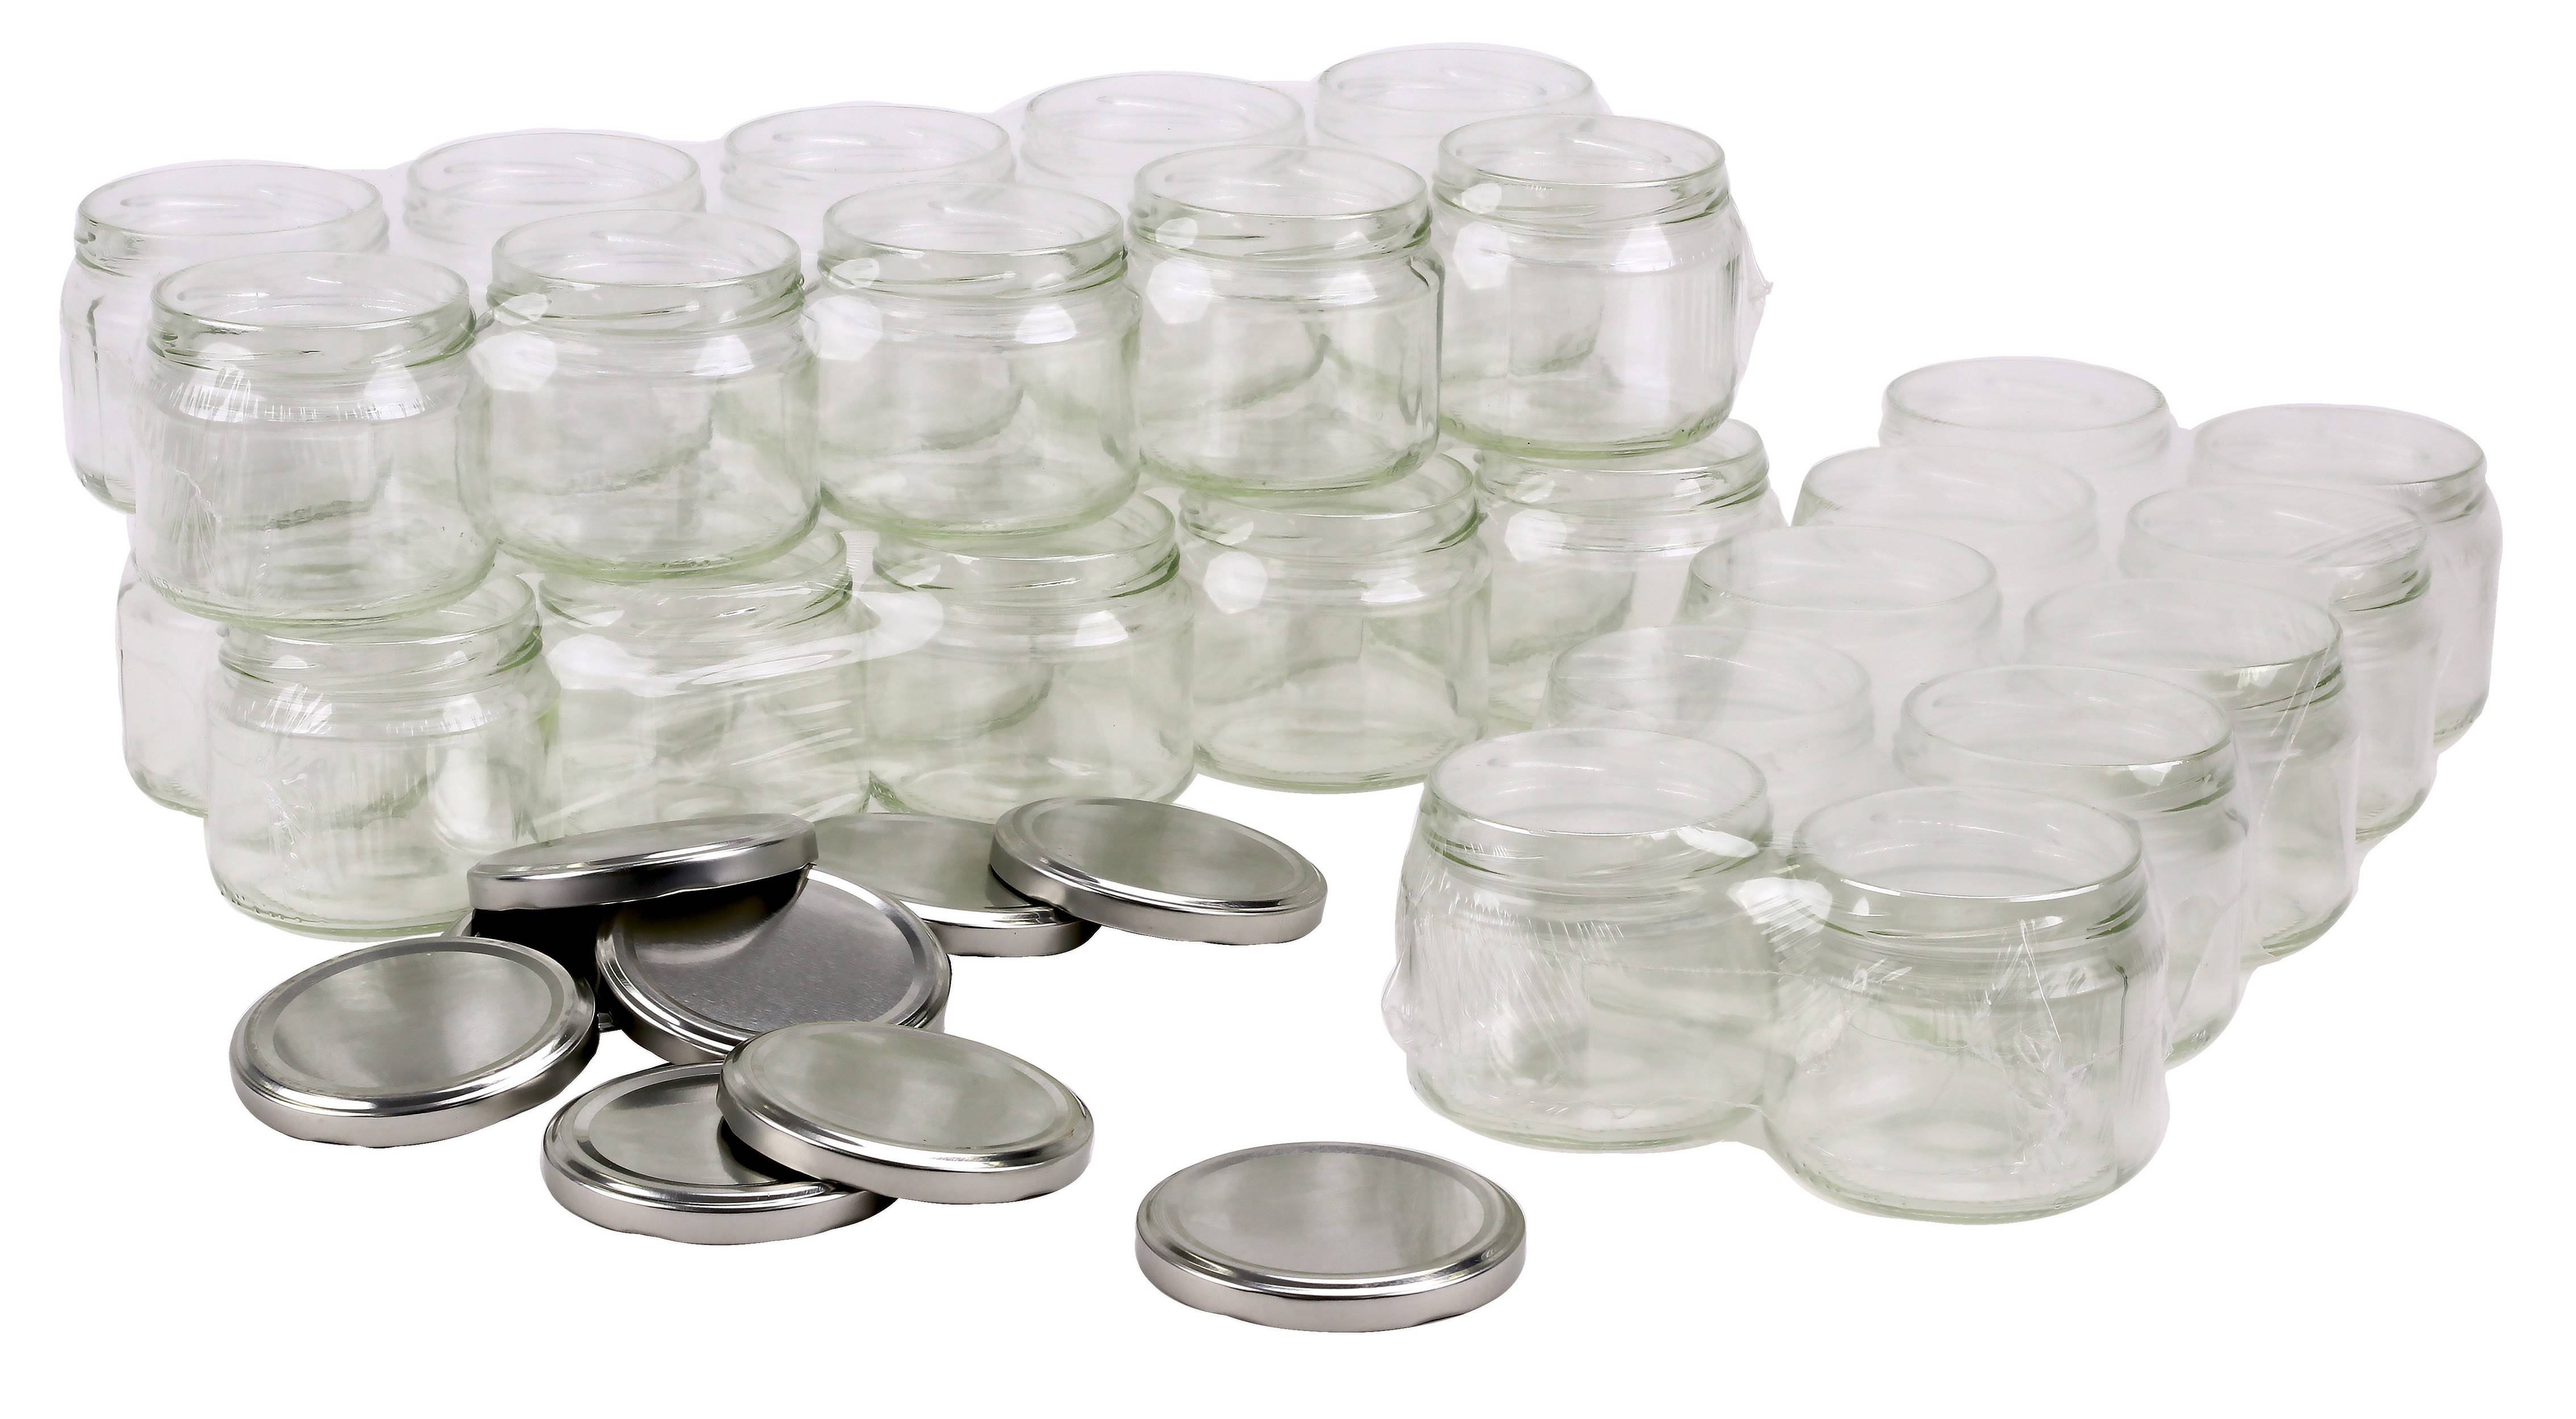 Round Glass Jar - 300ml / 420gm size -with Silver Lids